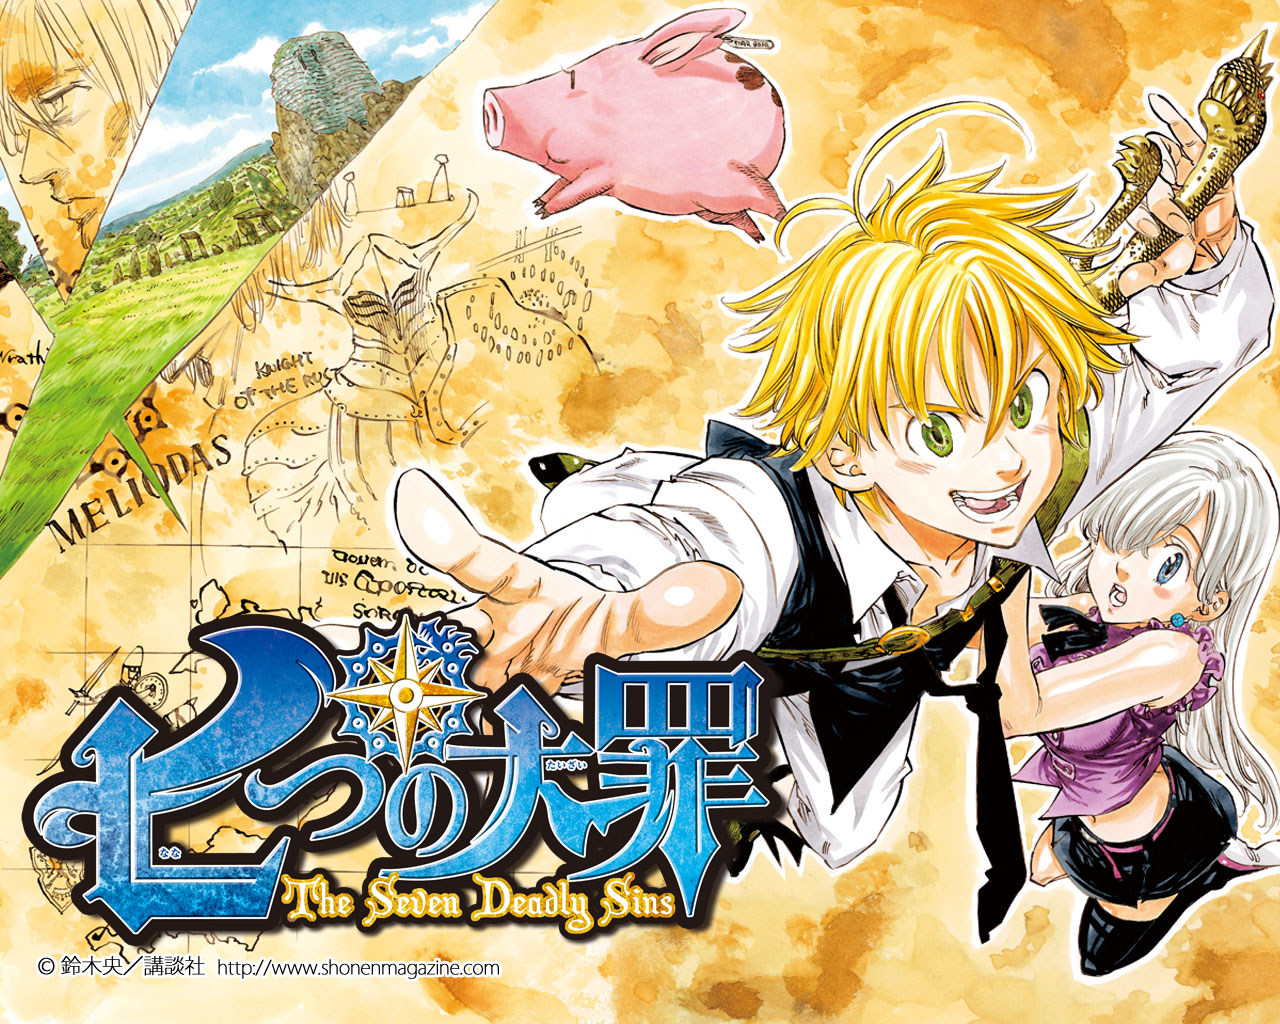 ‘The Seven Deadly Sins’ Manga Gets Anime Adaptation